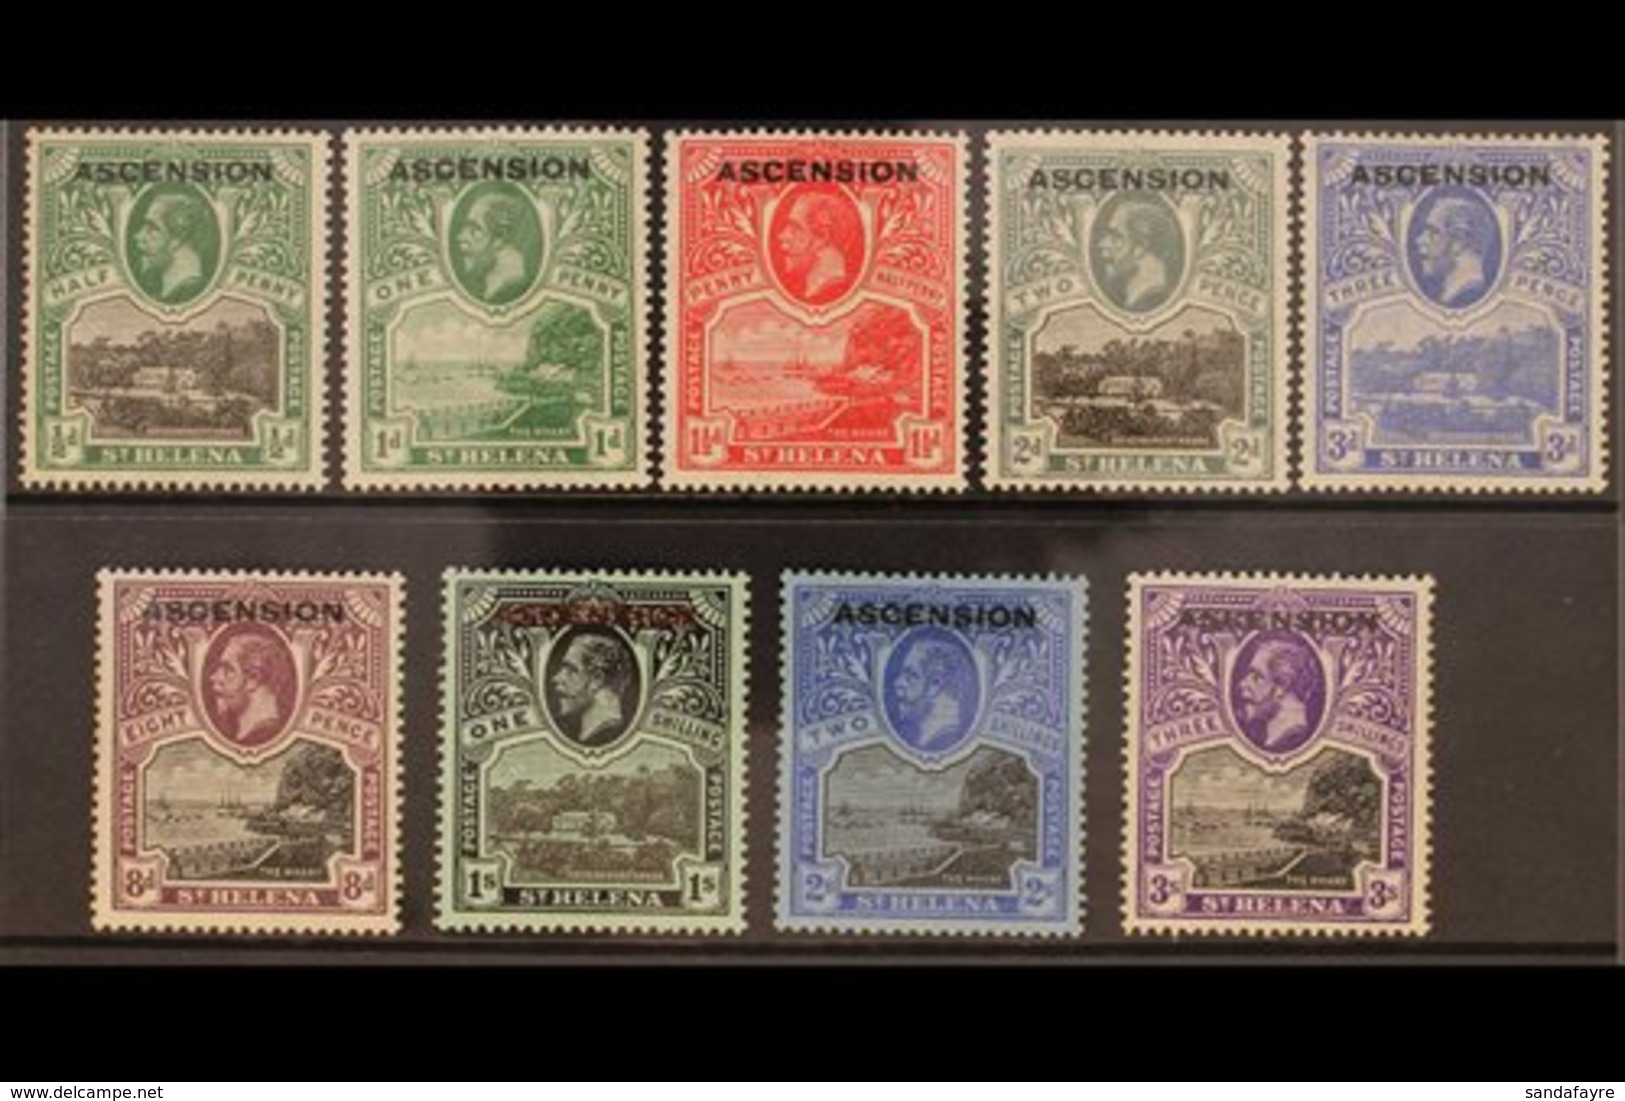 1922 Overprints Complete Set, SG 1/9, Fine Mint, Lovely Fresh Colours. (9 Stamps) For More Images, Please Visit Http://w - Ascension